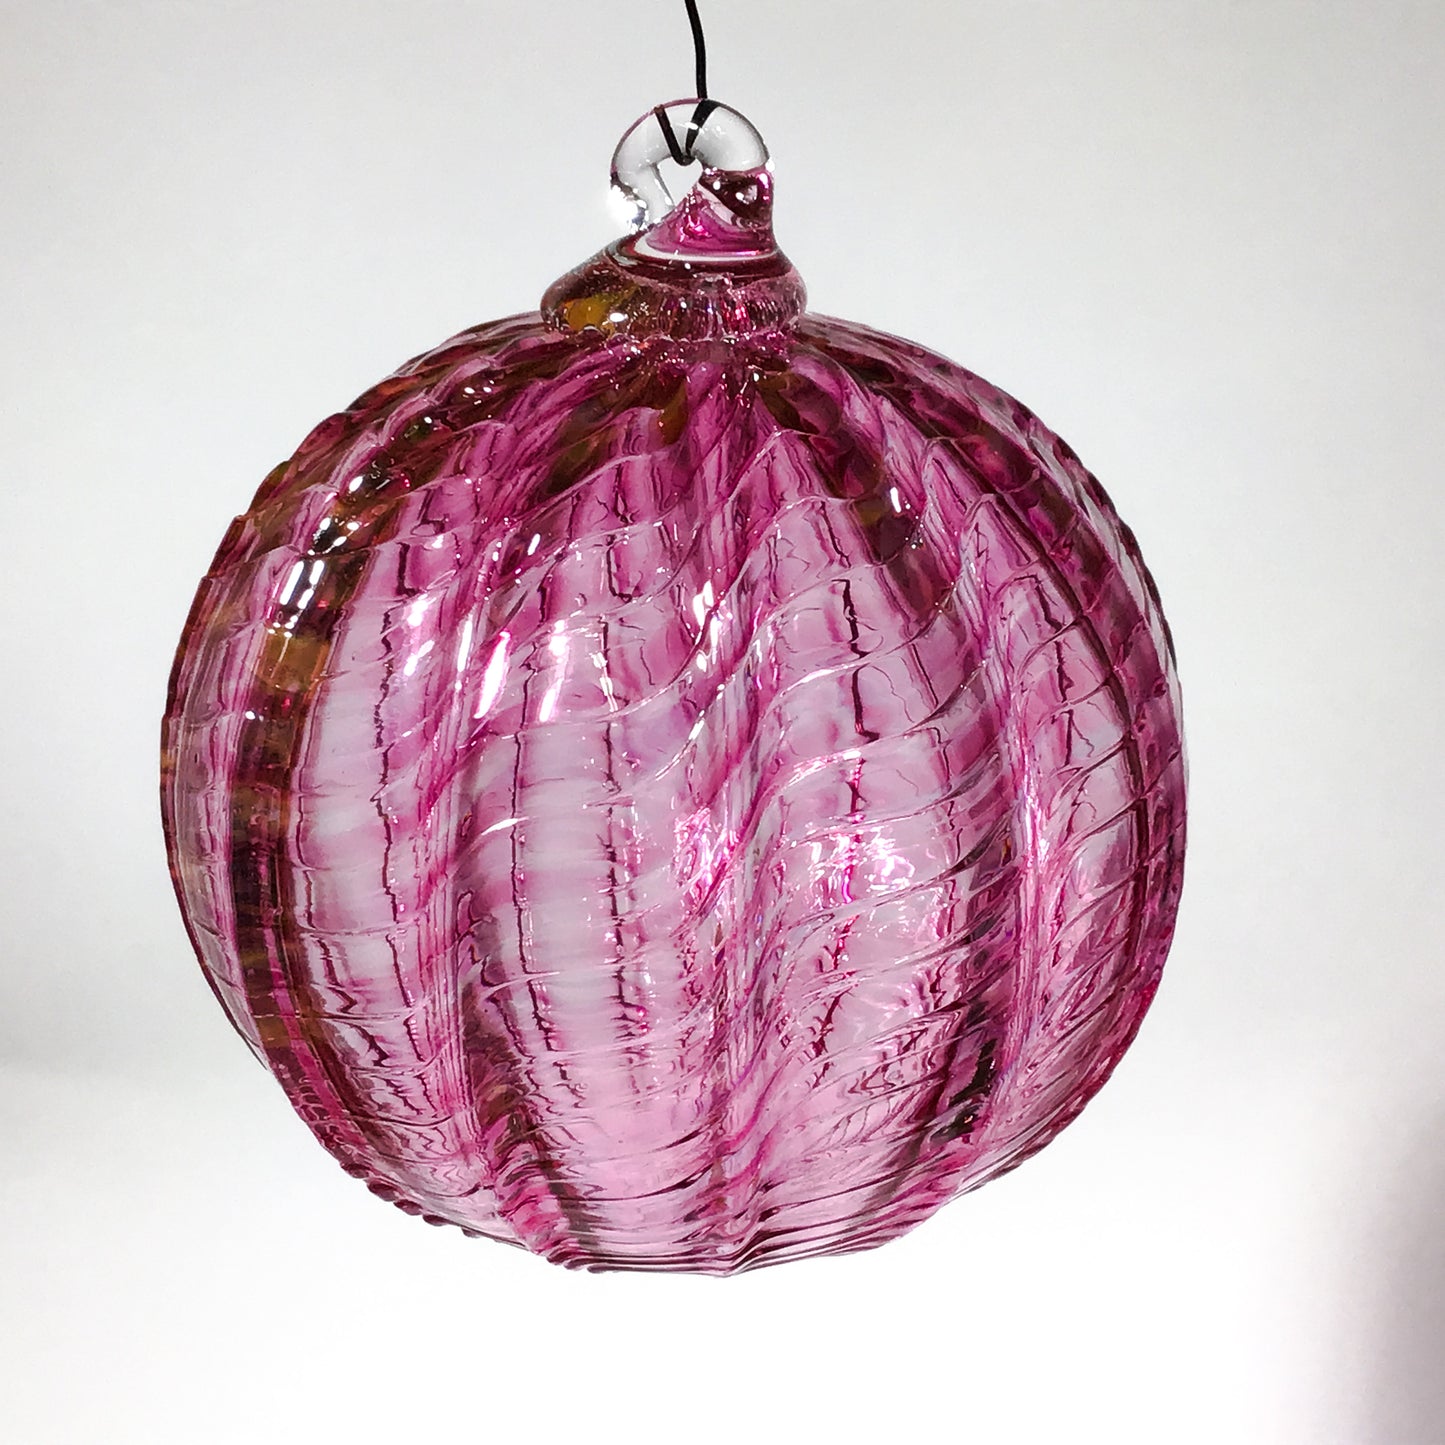 Glass Spheres - Alpine Lantern Series (Friendship/Christmas Ball)